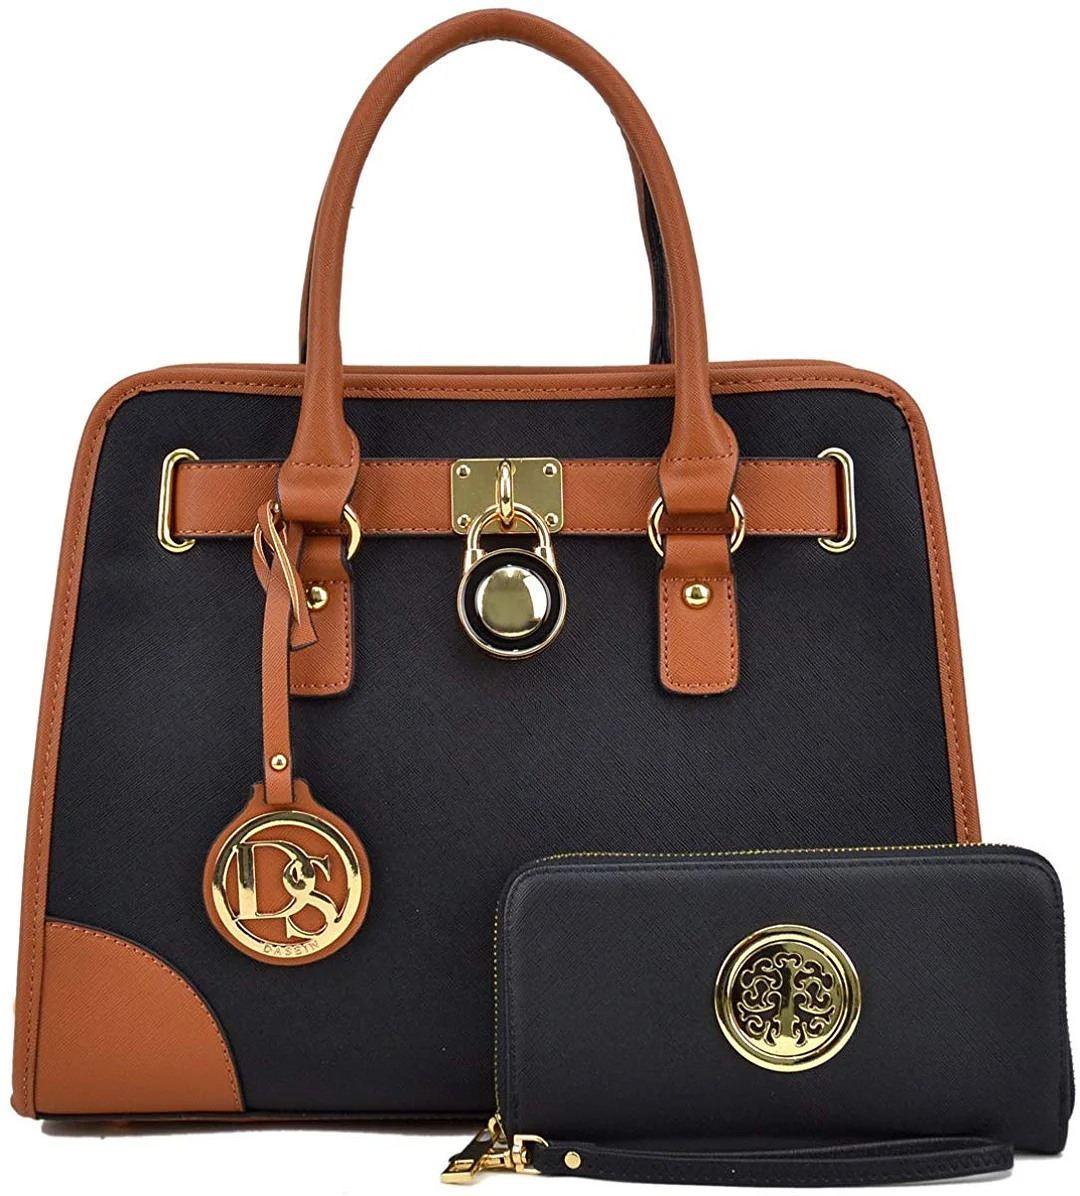 Women Handbags Top Handle Satchel Purse Shoulder Bag Briefcase Hobo Bag Set 2pcs